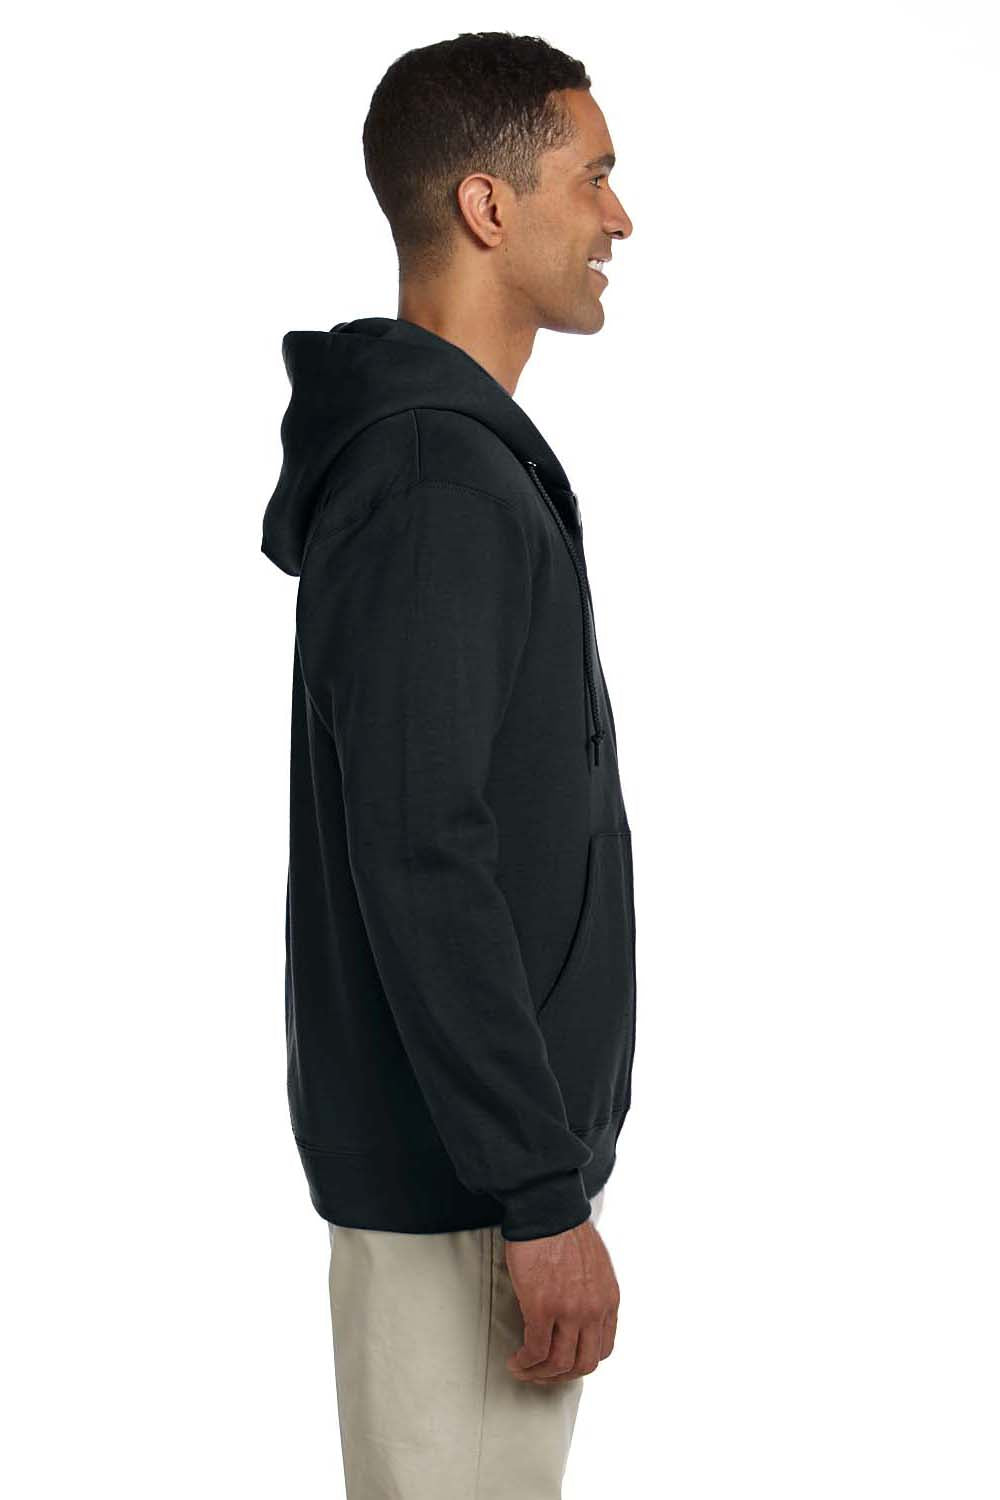 Jerzees 4999 Mens Super Sweats NuBlend Fleece Full Zip Hooded Sweatshirt Hoodie Black Side